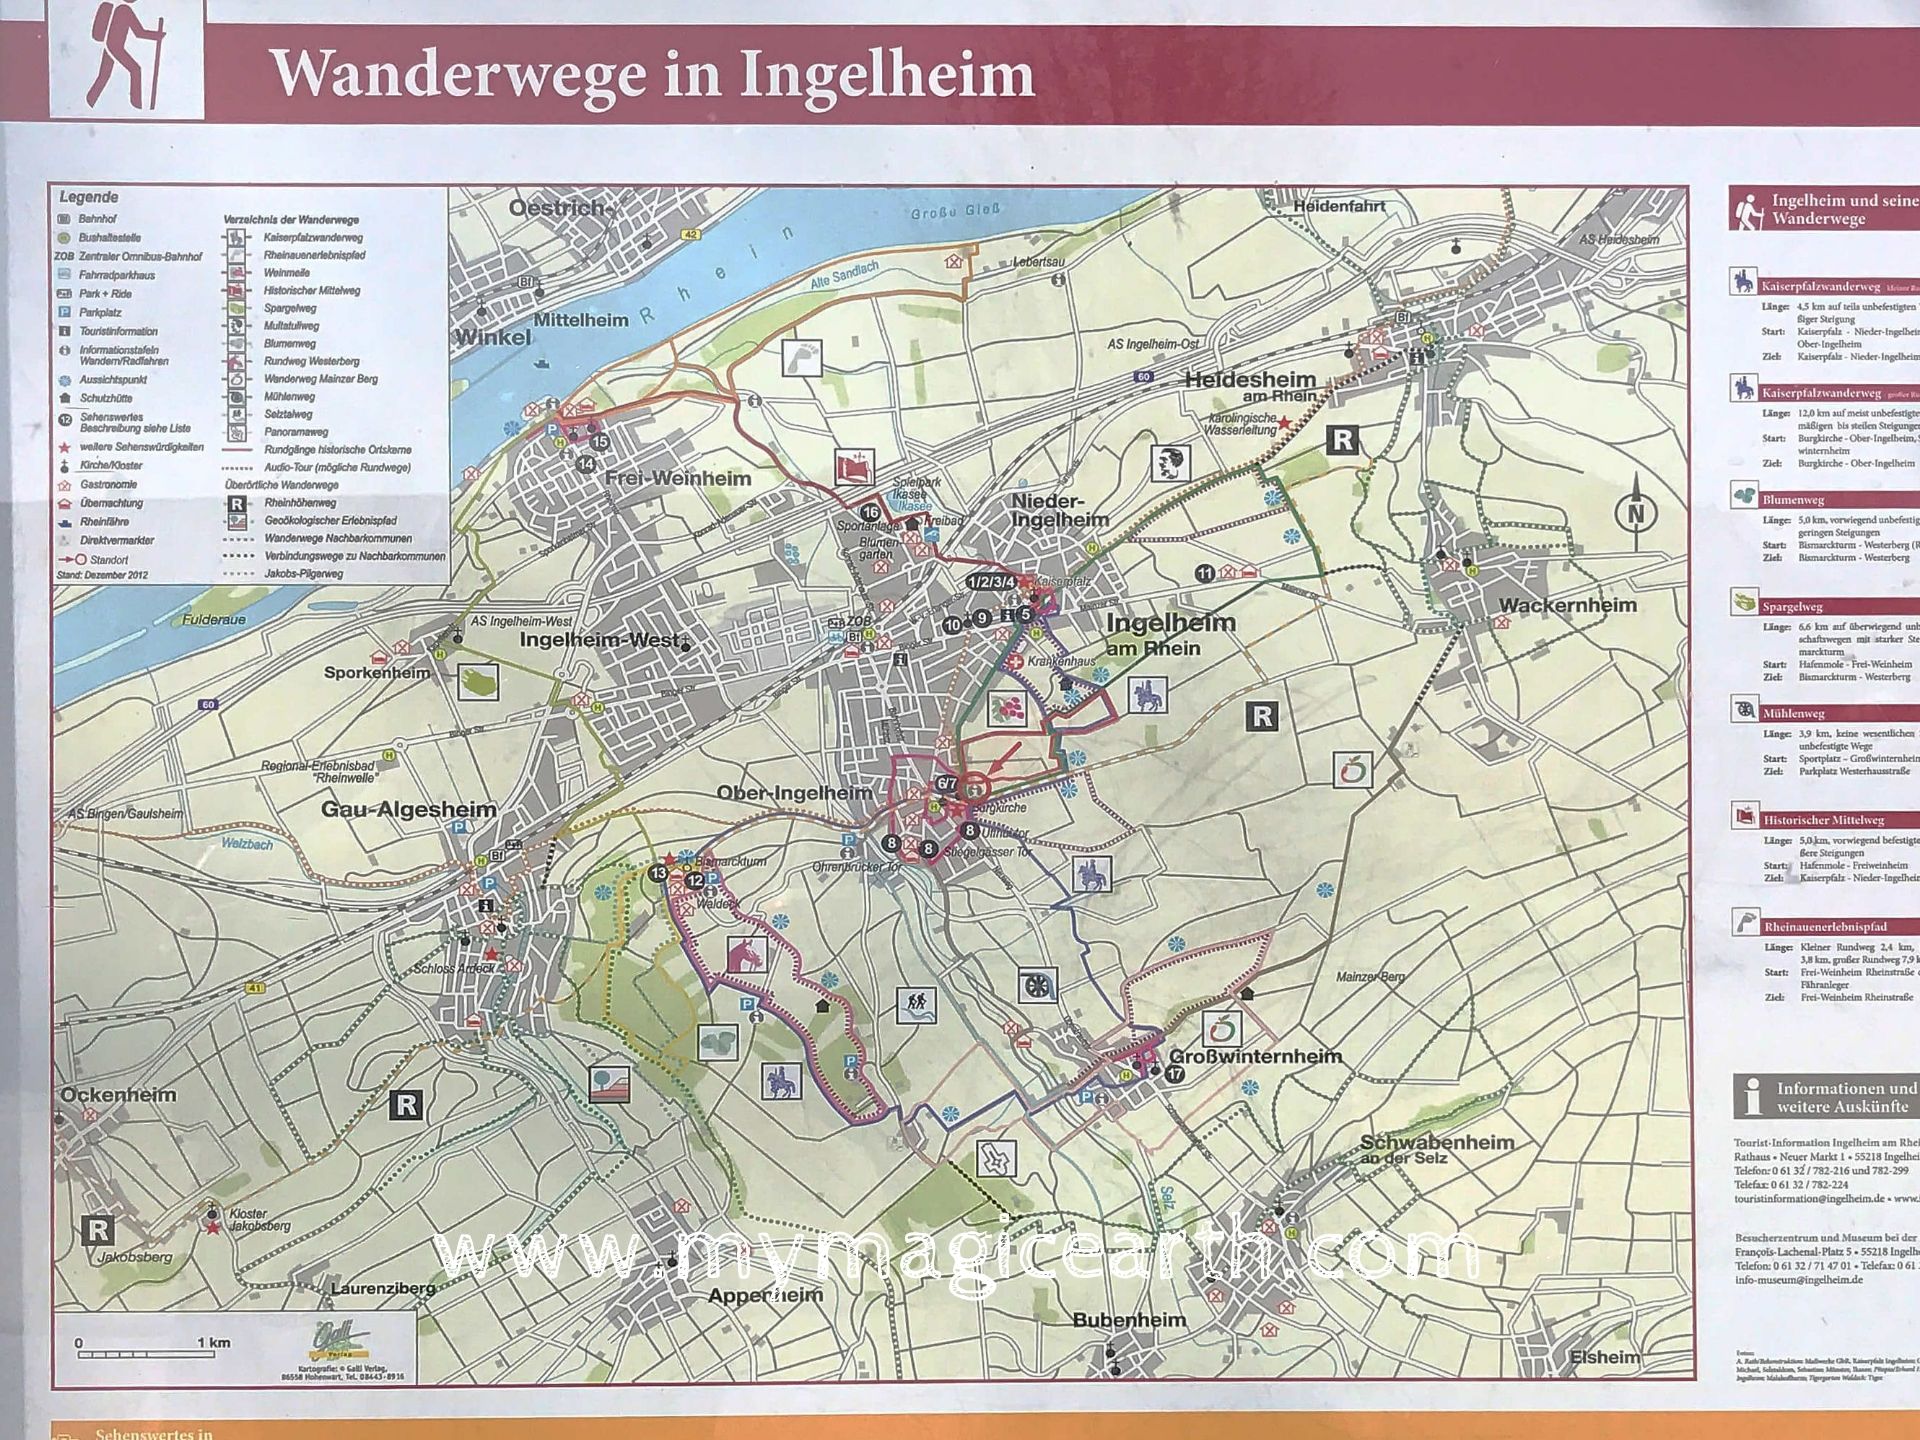 Hiking trails in Ingelheim, Cycling trail in Ingelheim, Rhine River, Germany